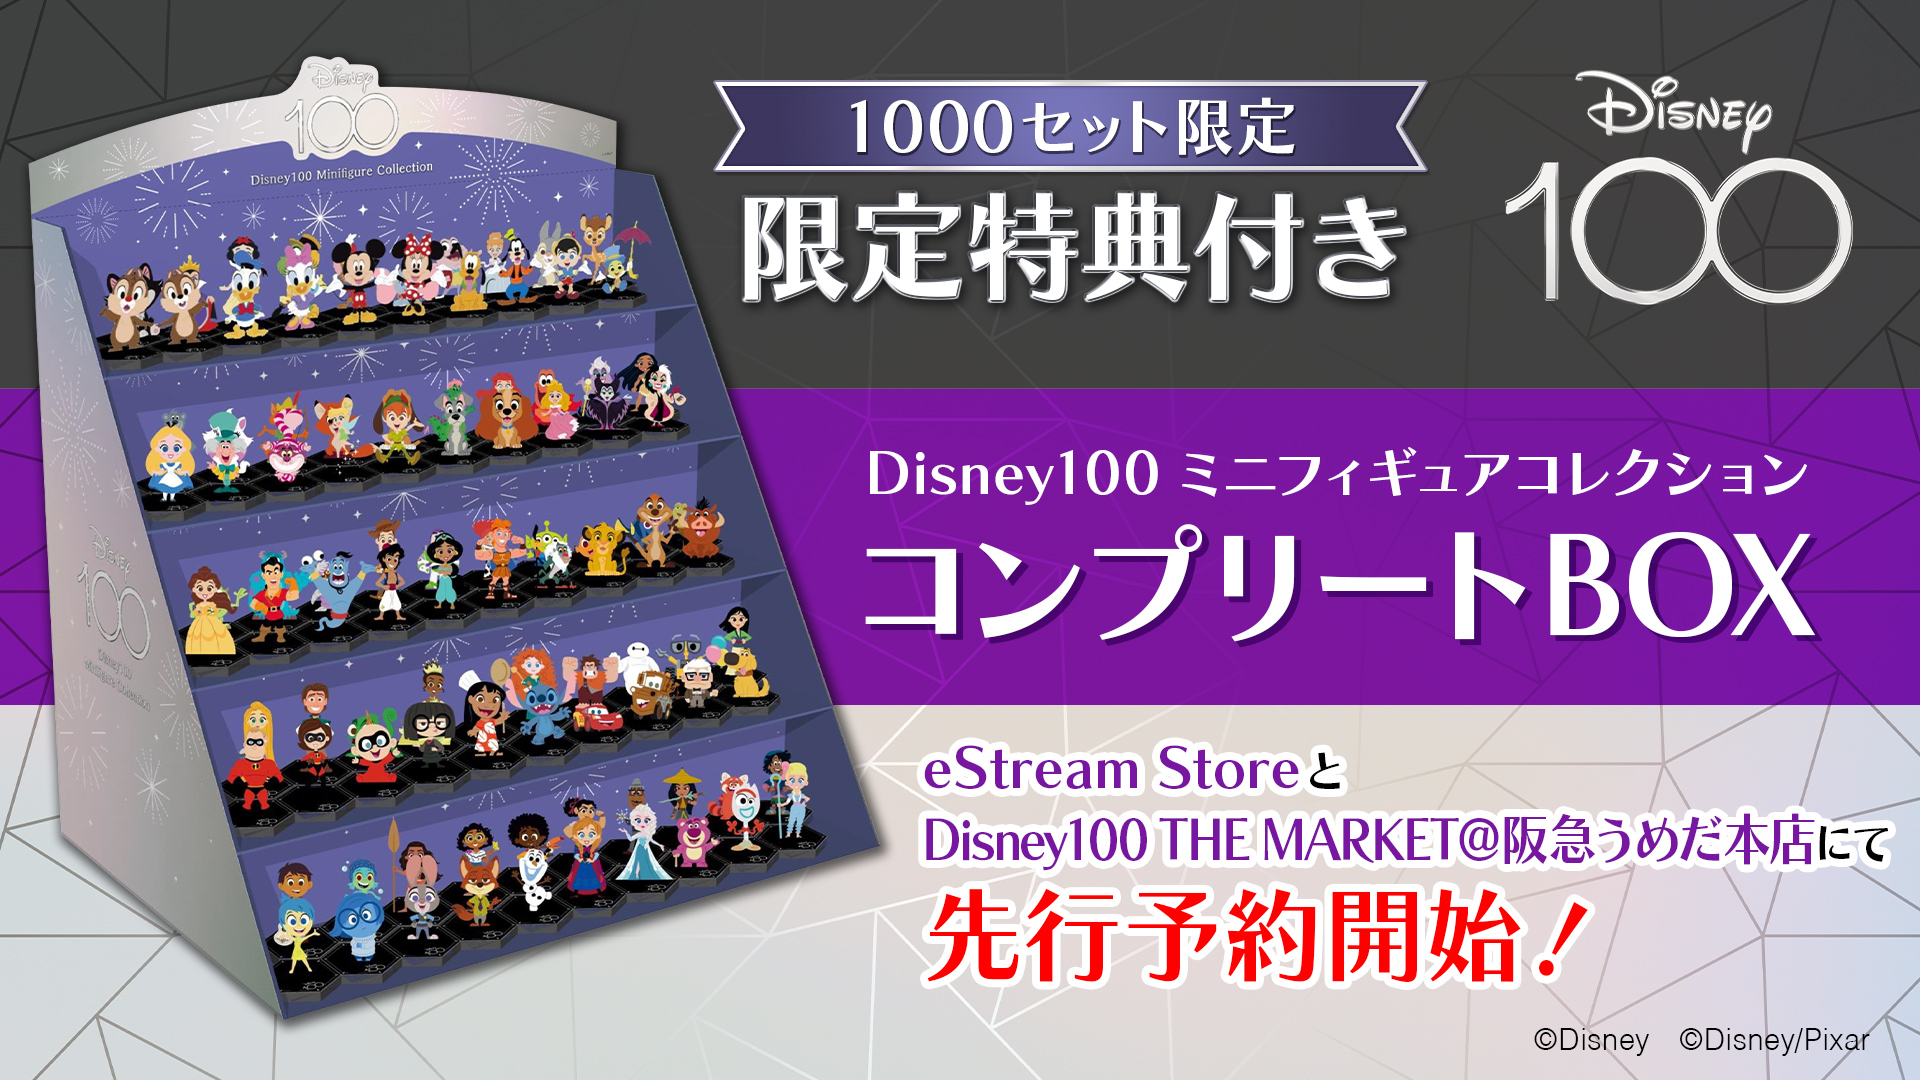 Disney100 ミニフィギュアコレクション バルー - ゲームキャラクター